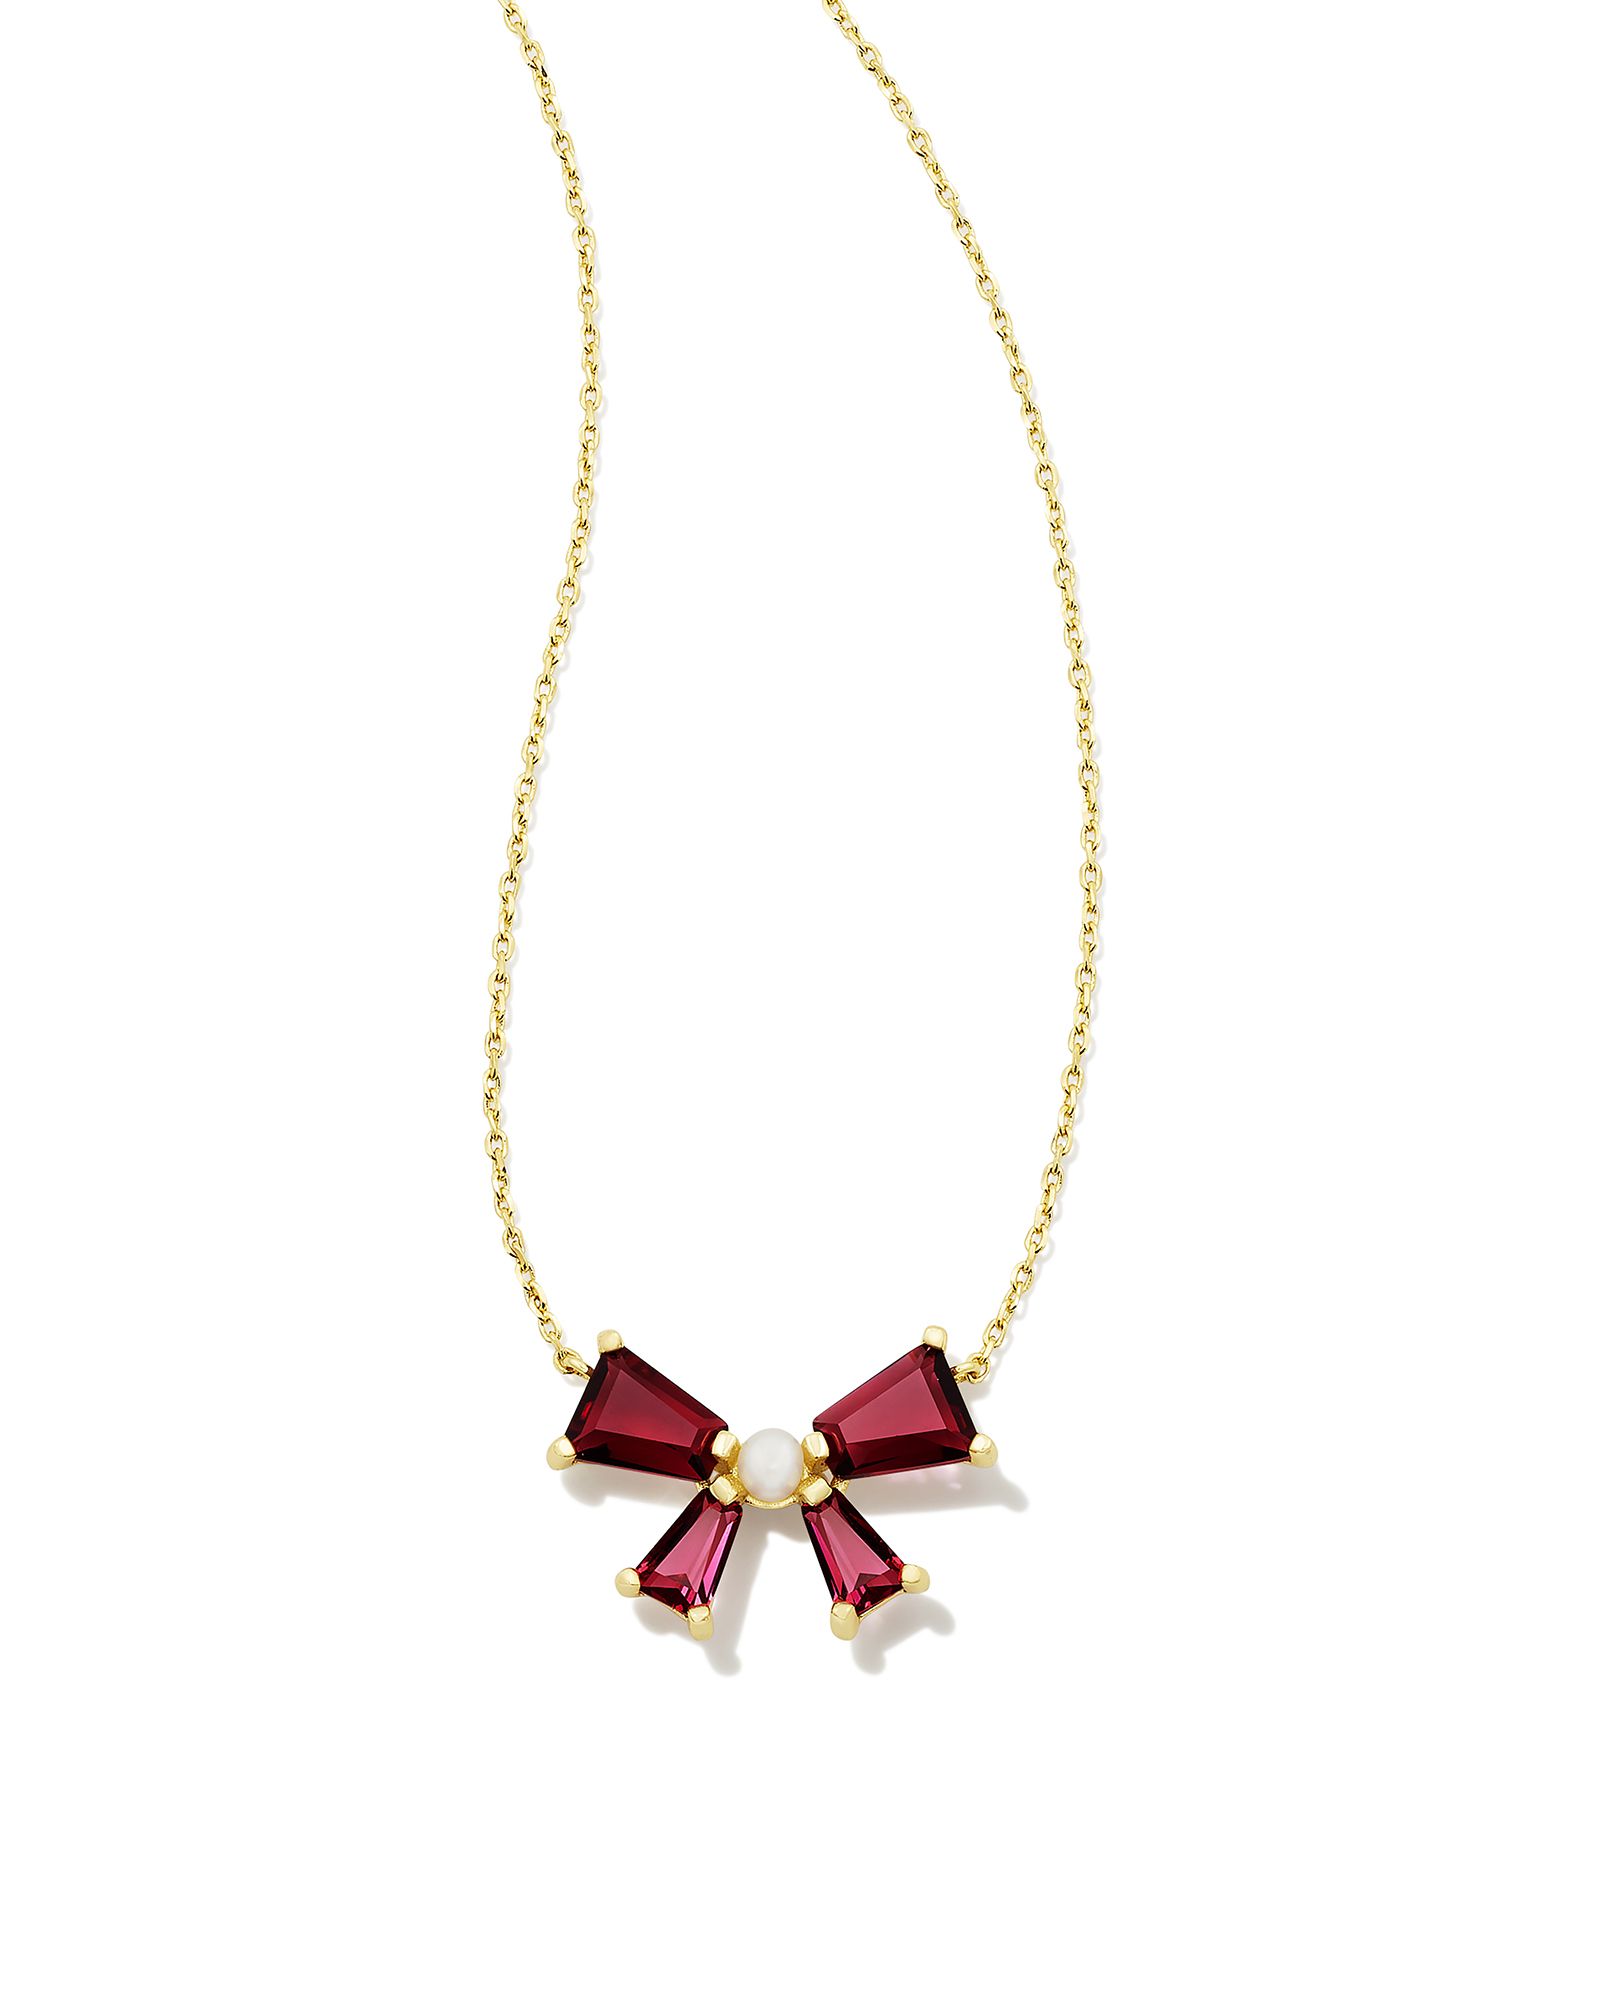 Blair Gold Bow Short Pendant Necklace in Red Mix | Kendra Scott | Kendra Scott